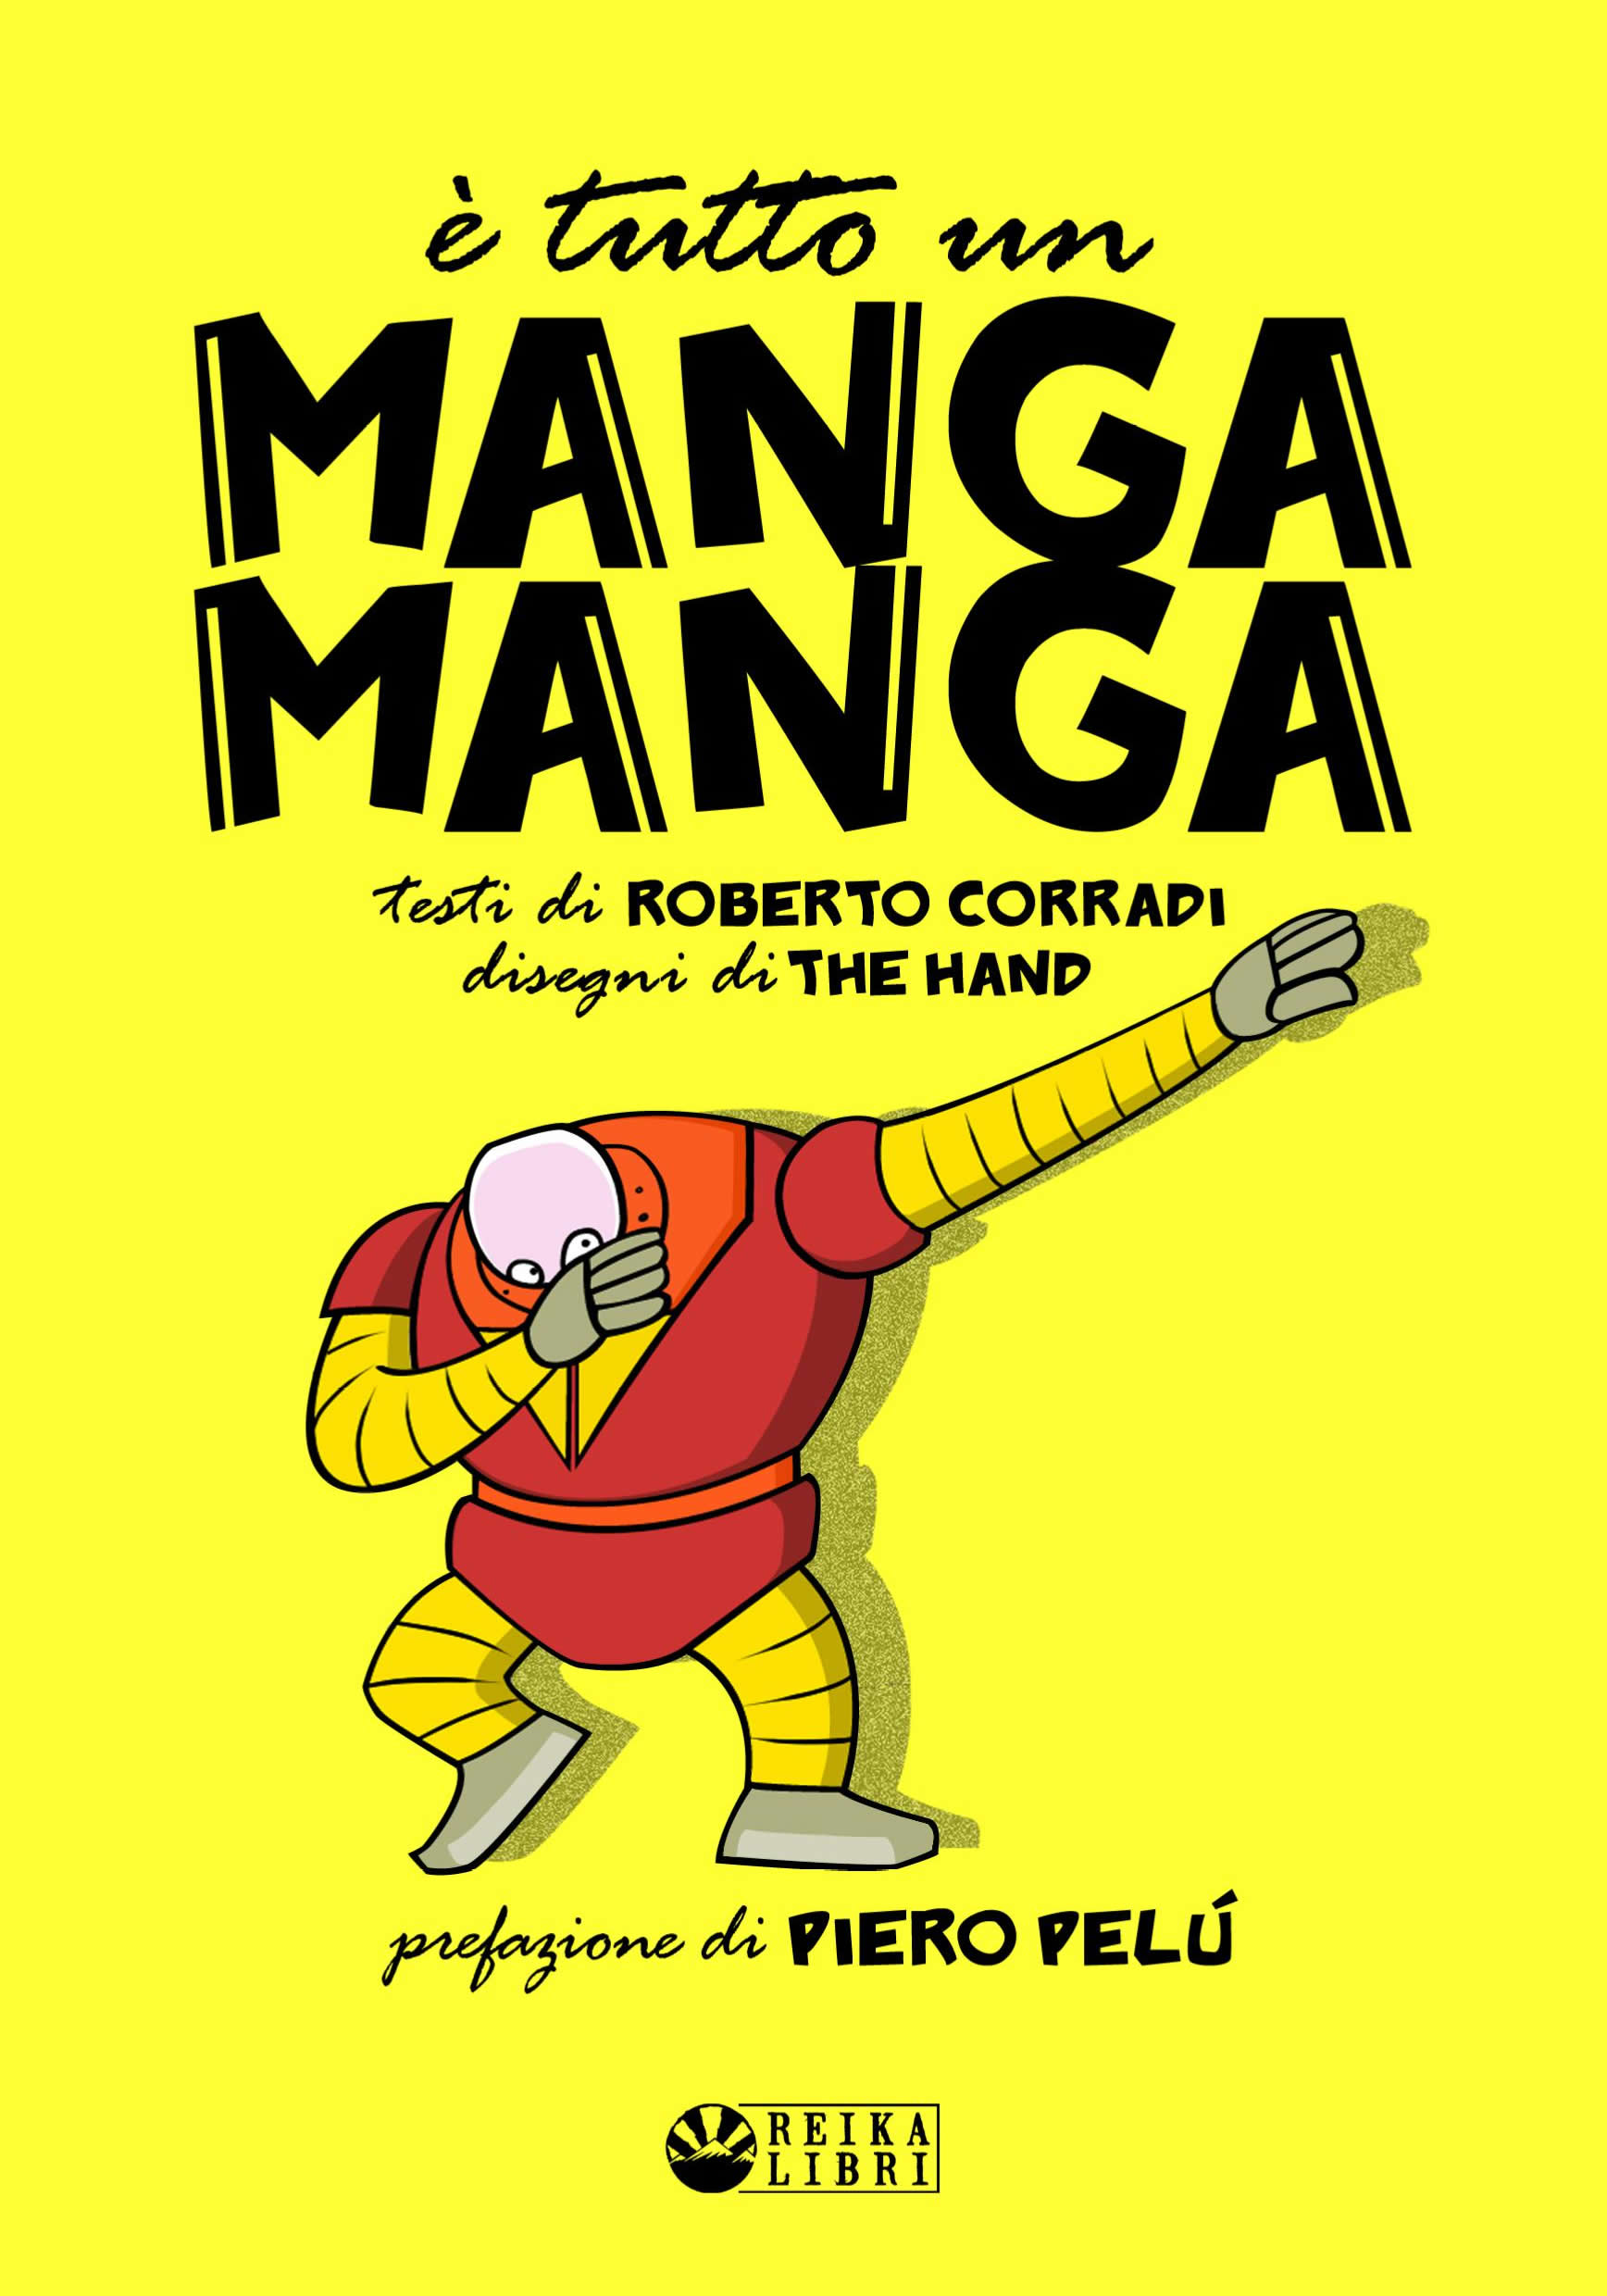 È tutto un Manga Manga: manuale satirico sui robottoni giapponesi